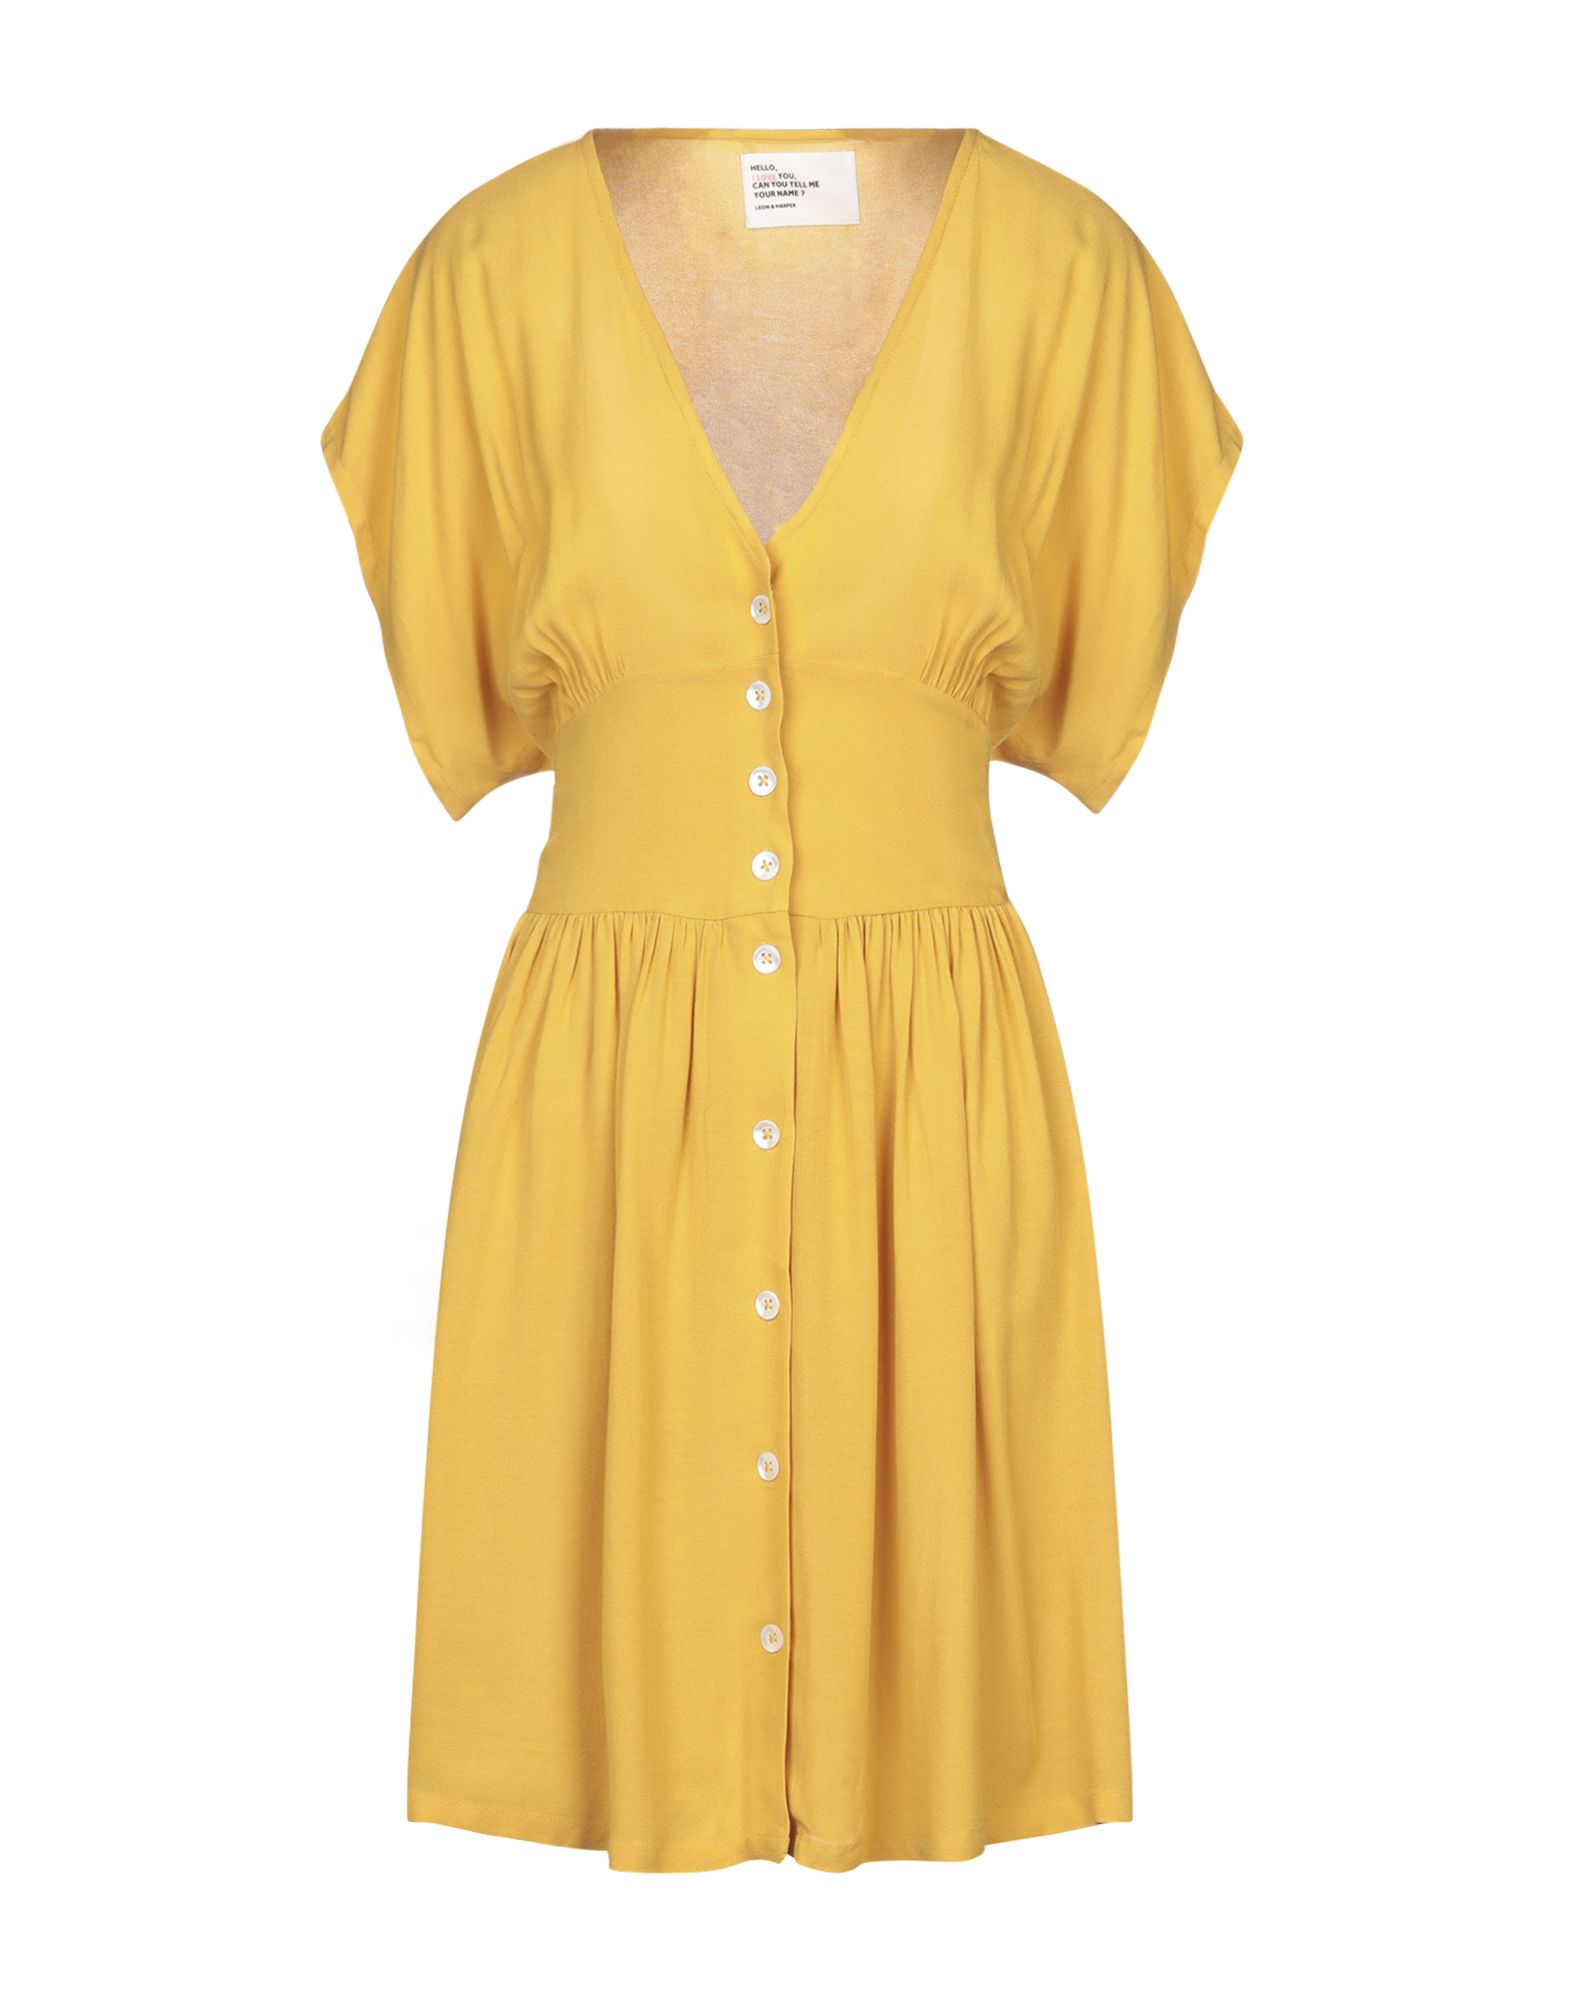 Leon & Harper Short Dresses In Yellow